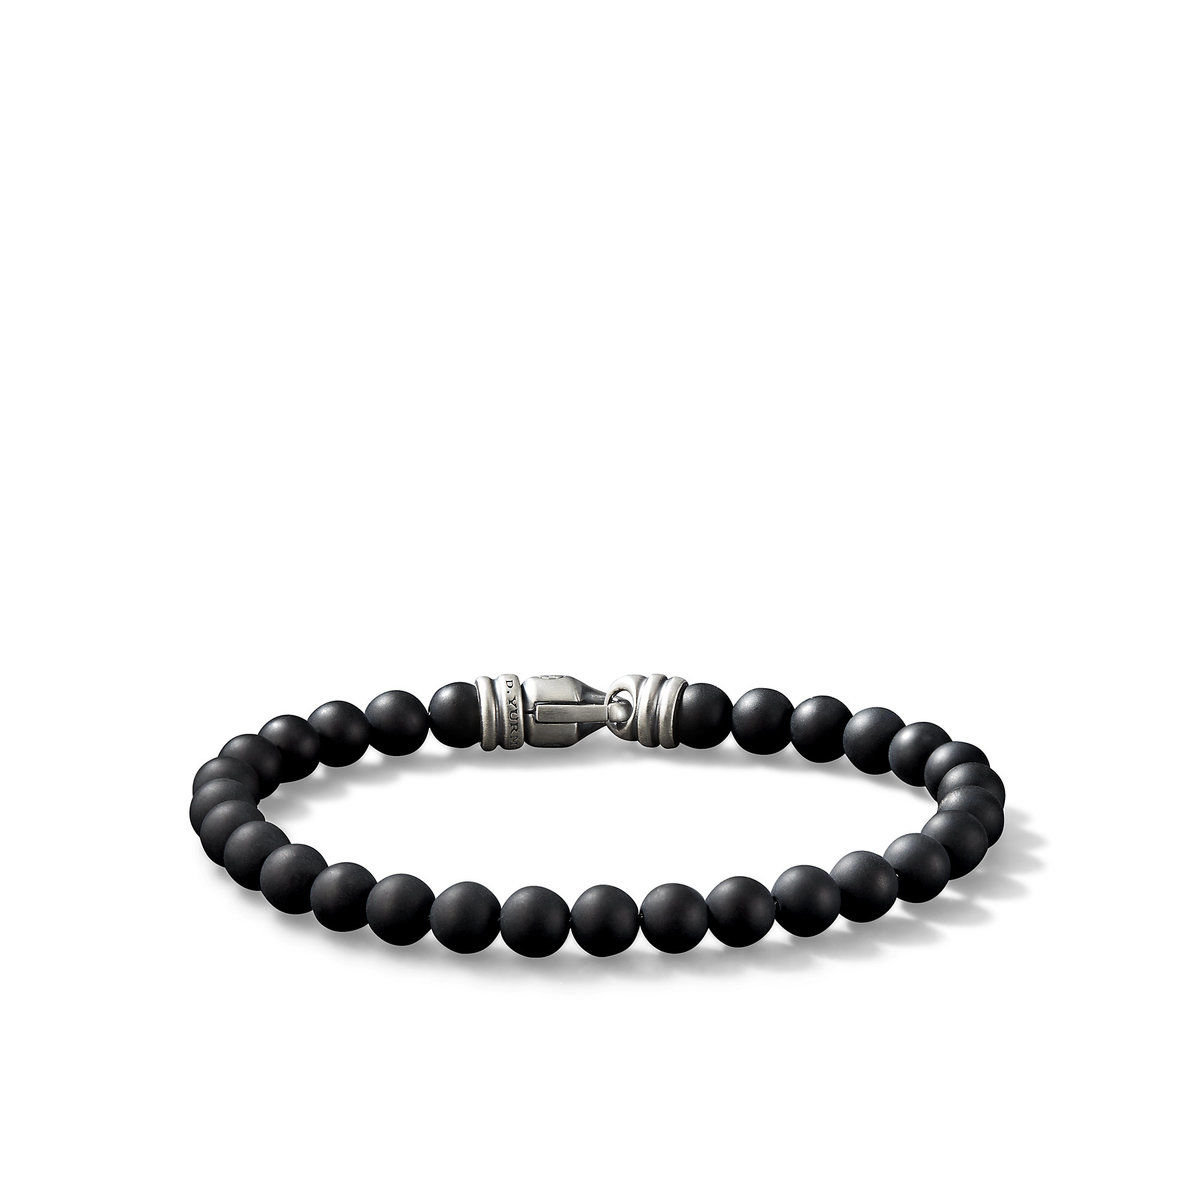 David Yurman Spiritual Beads Bracelet with Black Onyx - 8 Inches